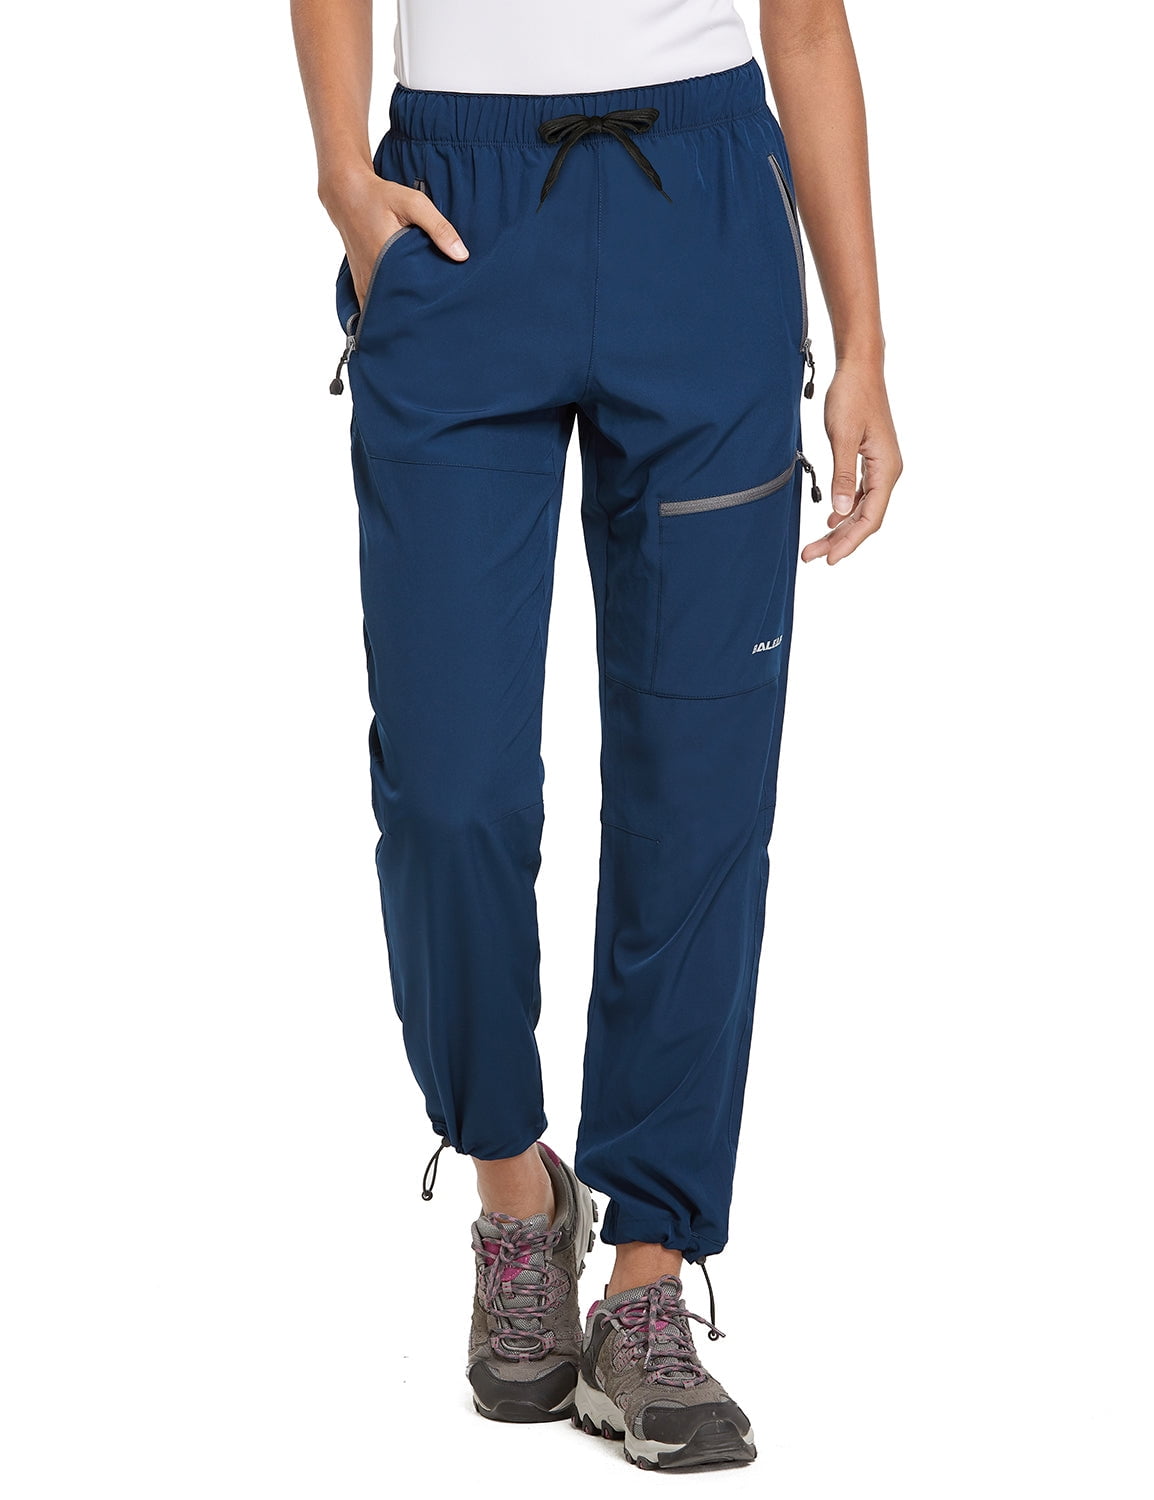 Women's Hiking Cargo Pants Lightweight Water Resistant Capris Outdoor Fishing Pants UPF 50 Zipper Pockets 